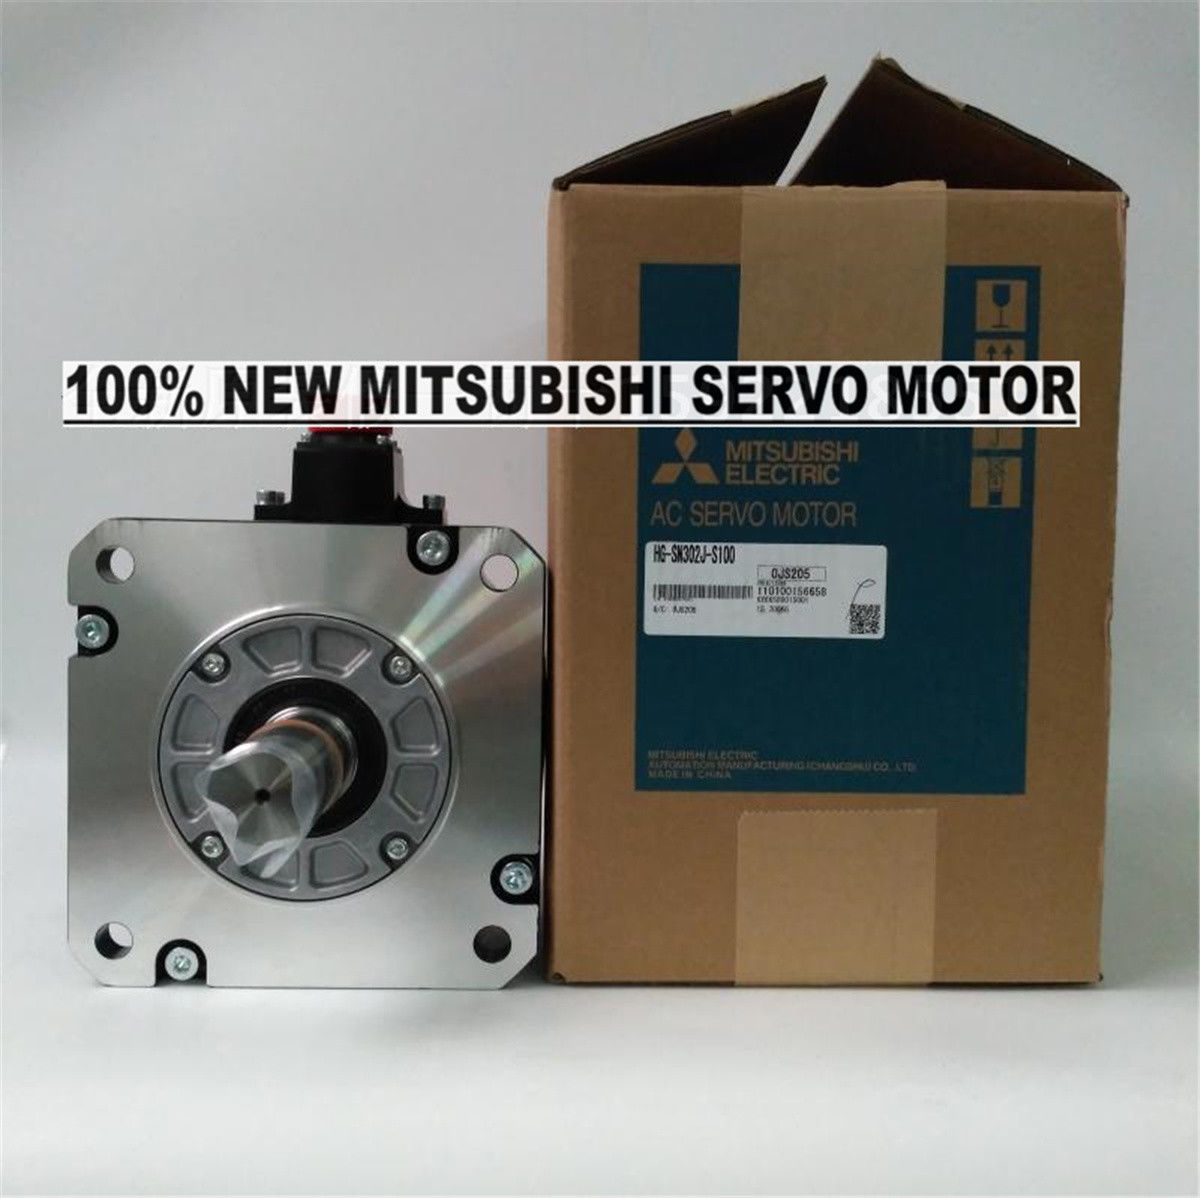 NEW Mitsubishi Servo Motor HG-SN302J-S100 in box HGSN302JS100